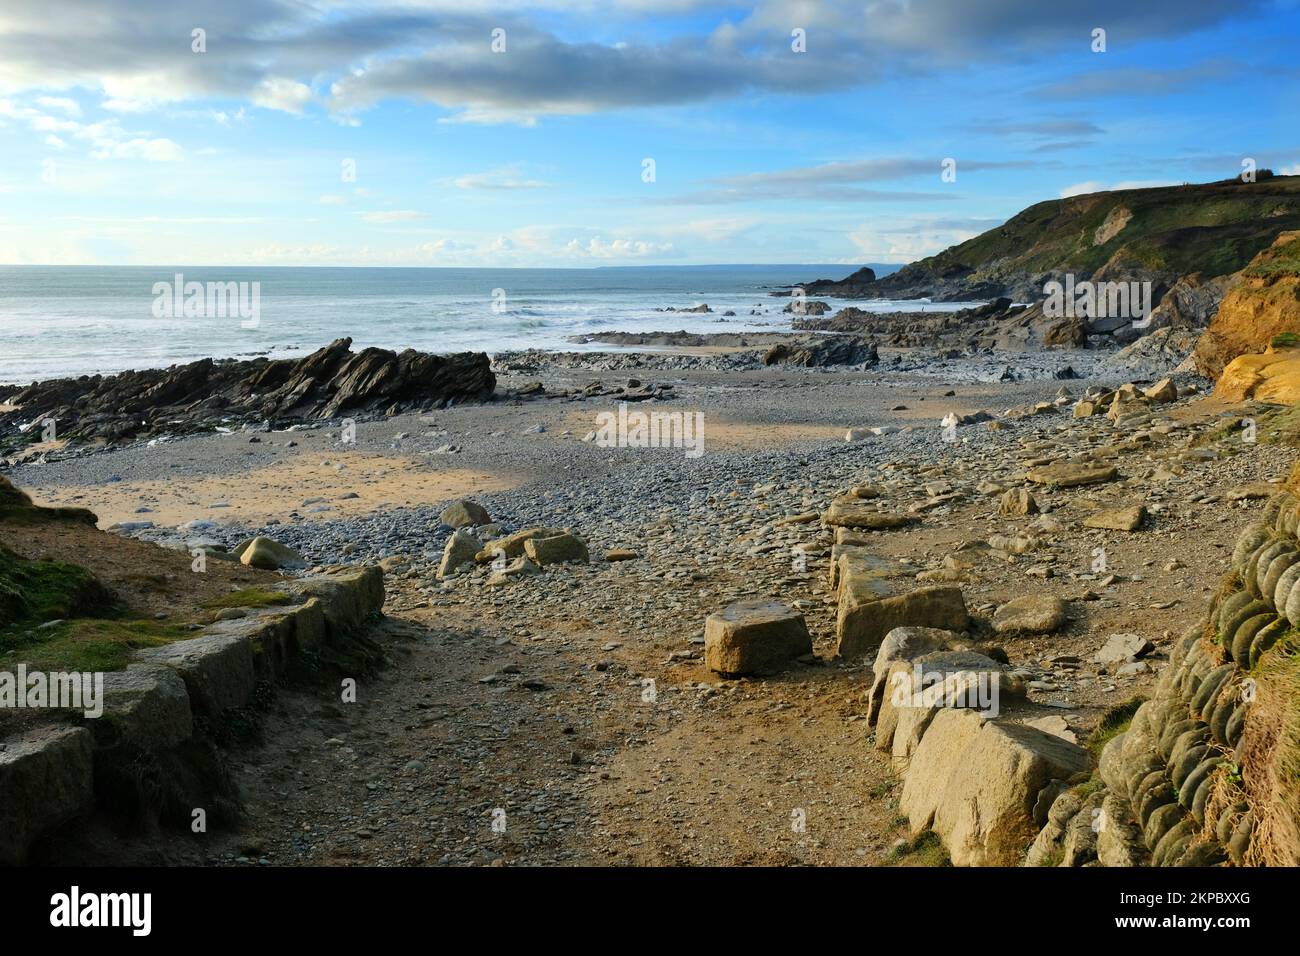 La plage de Dollar Cove, Gunwalloe, Cornwall, Royaume-Uni - John Gollop Banque D'Images